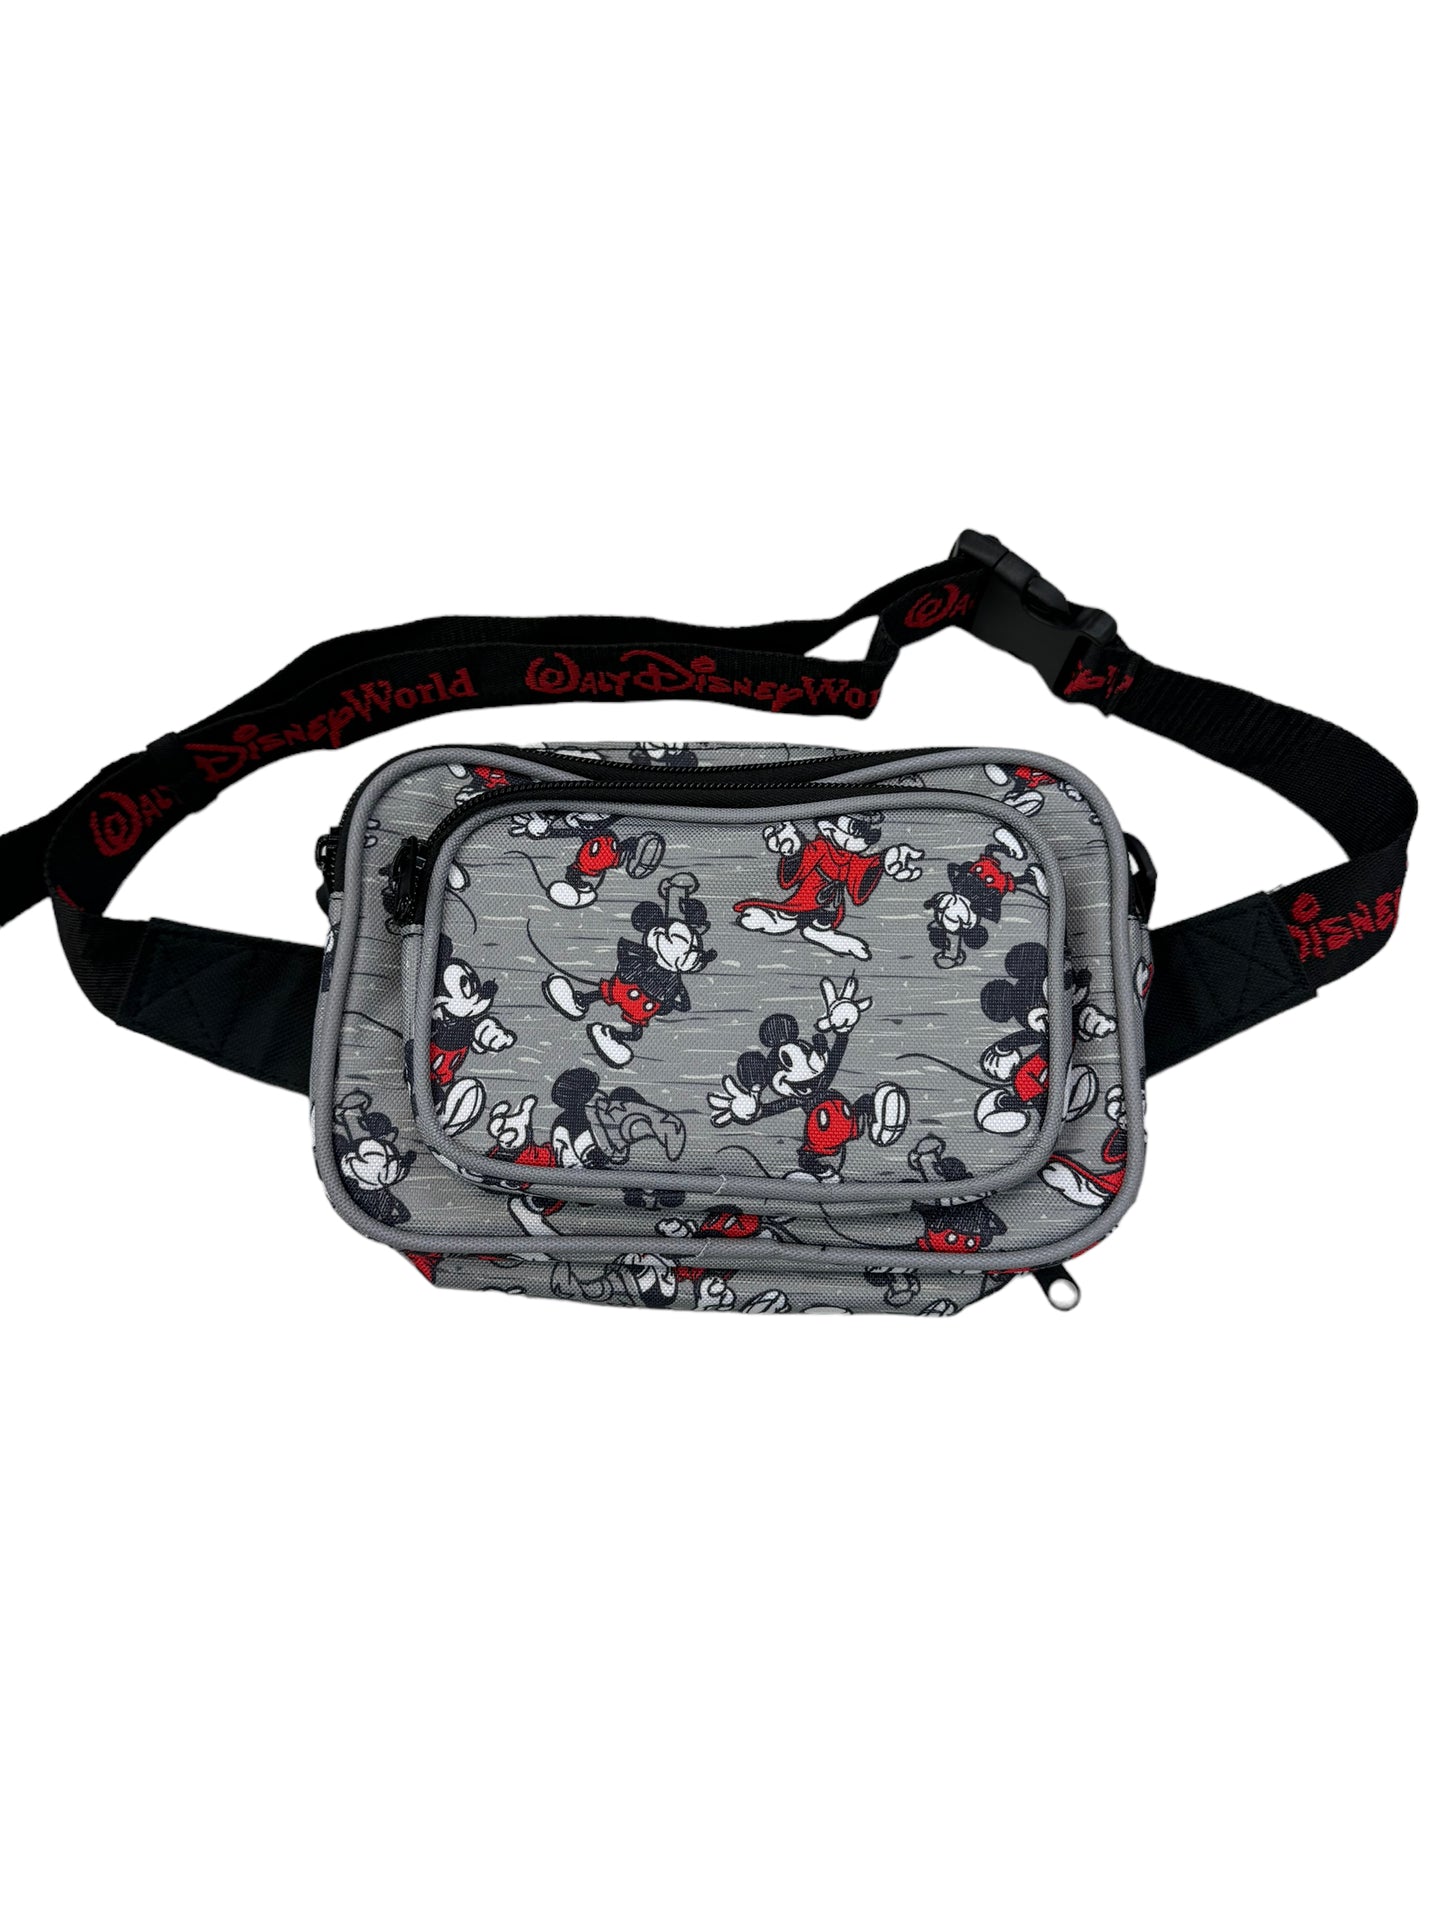 Belt Bag By Disney Store  Size: Medium